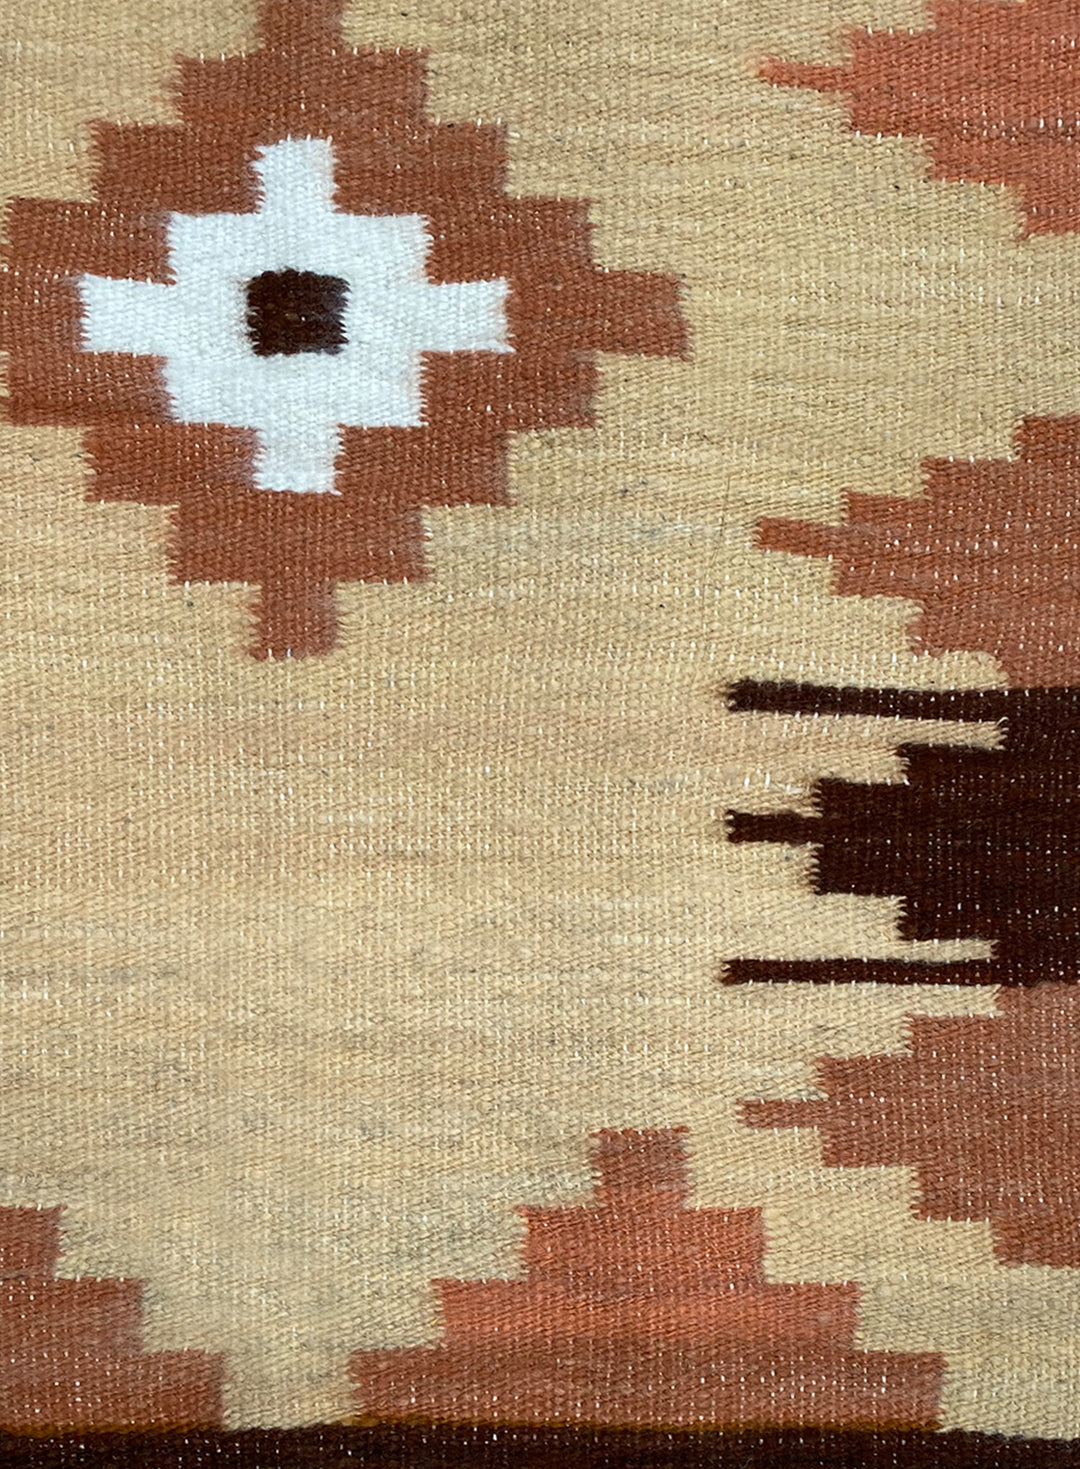 La Cruz + Peaks Tapestry in Camel and Peach